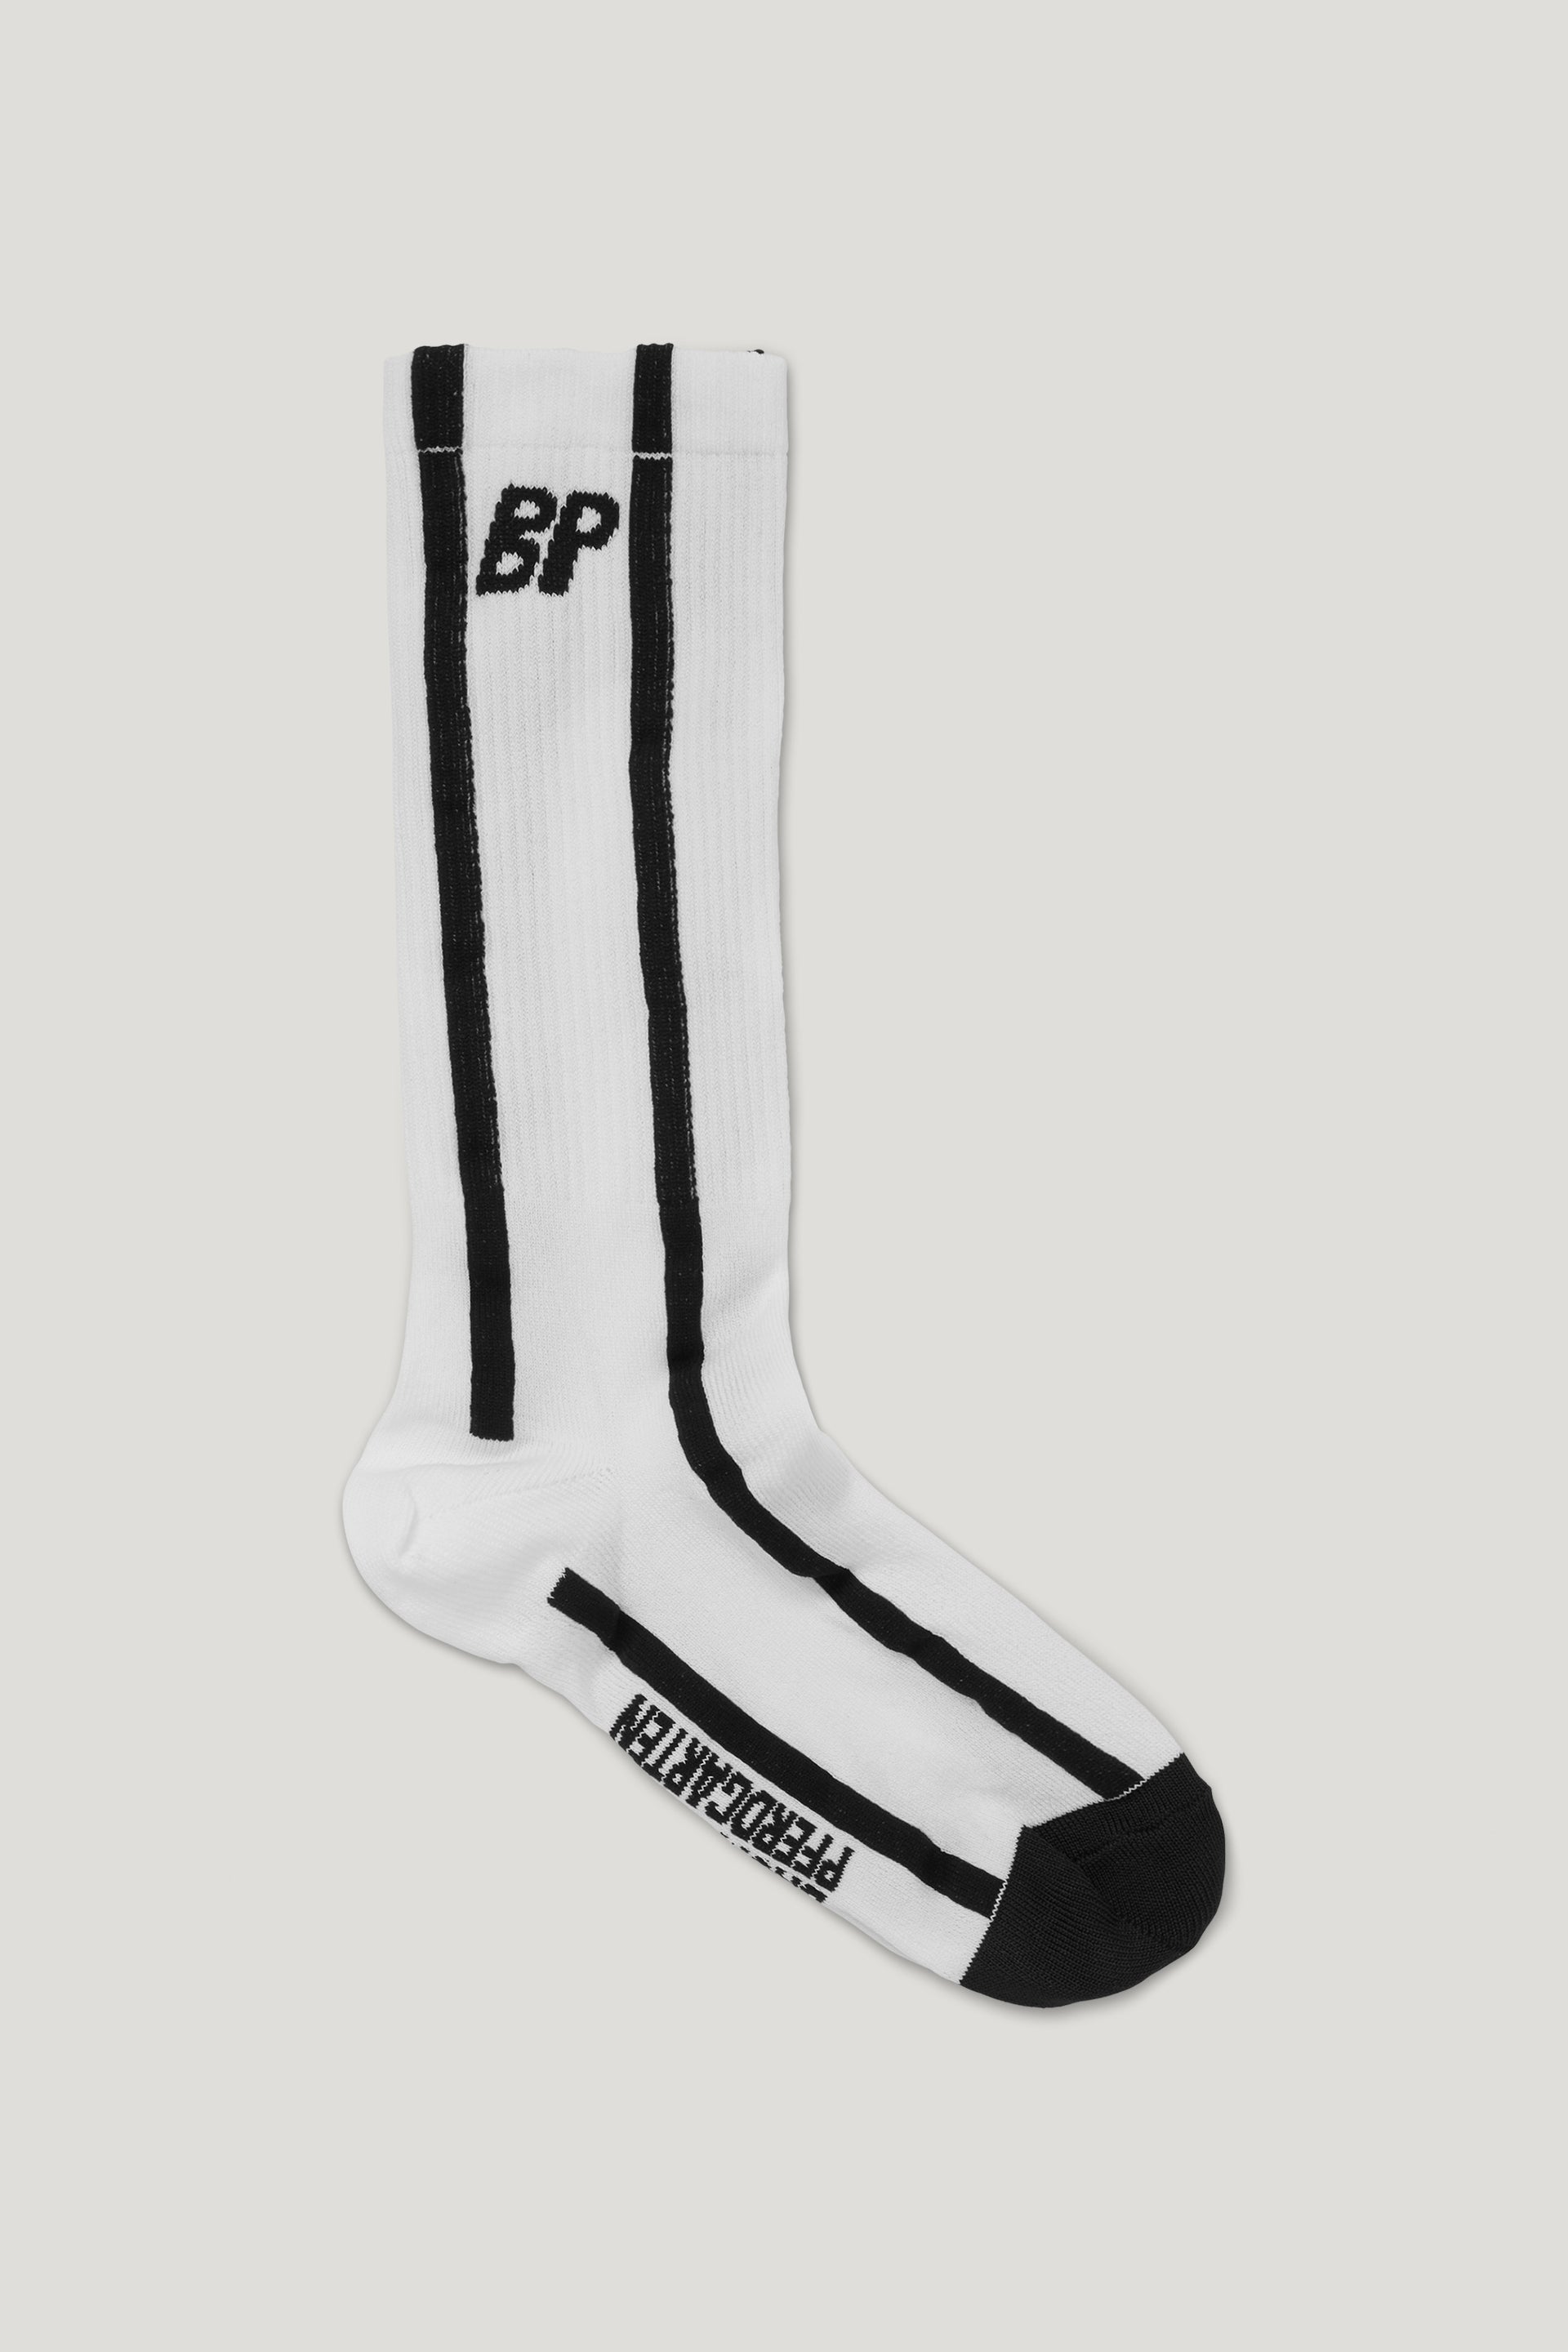 Ling BP Socks